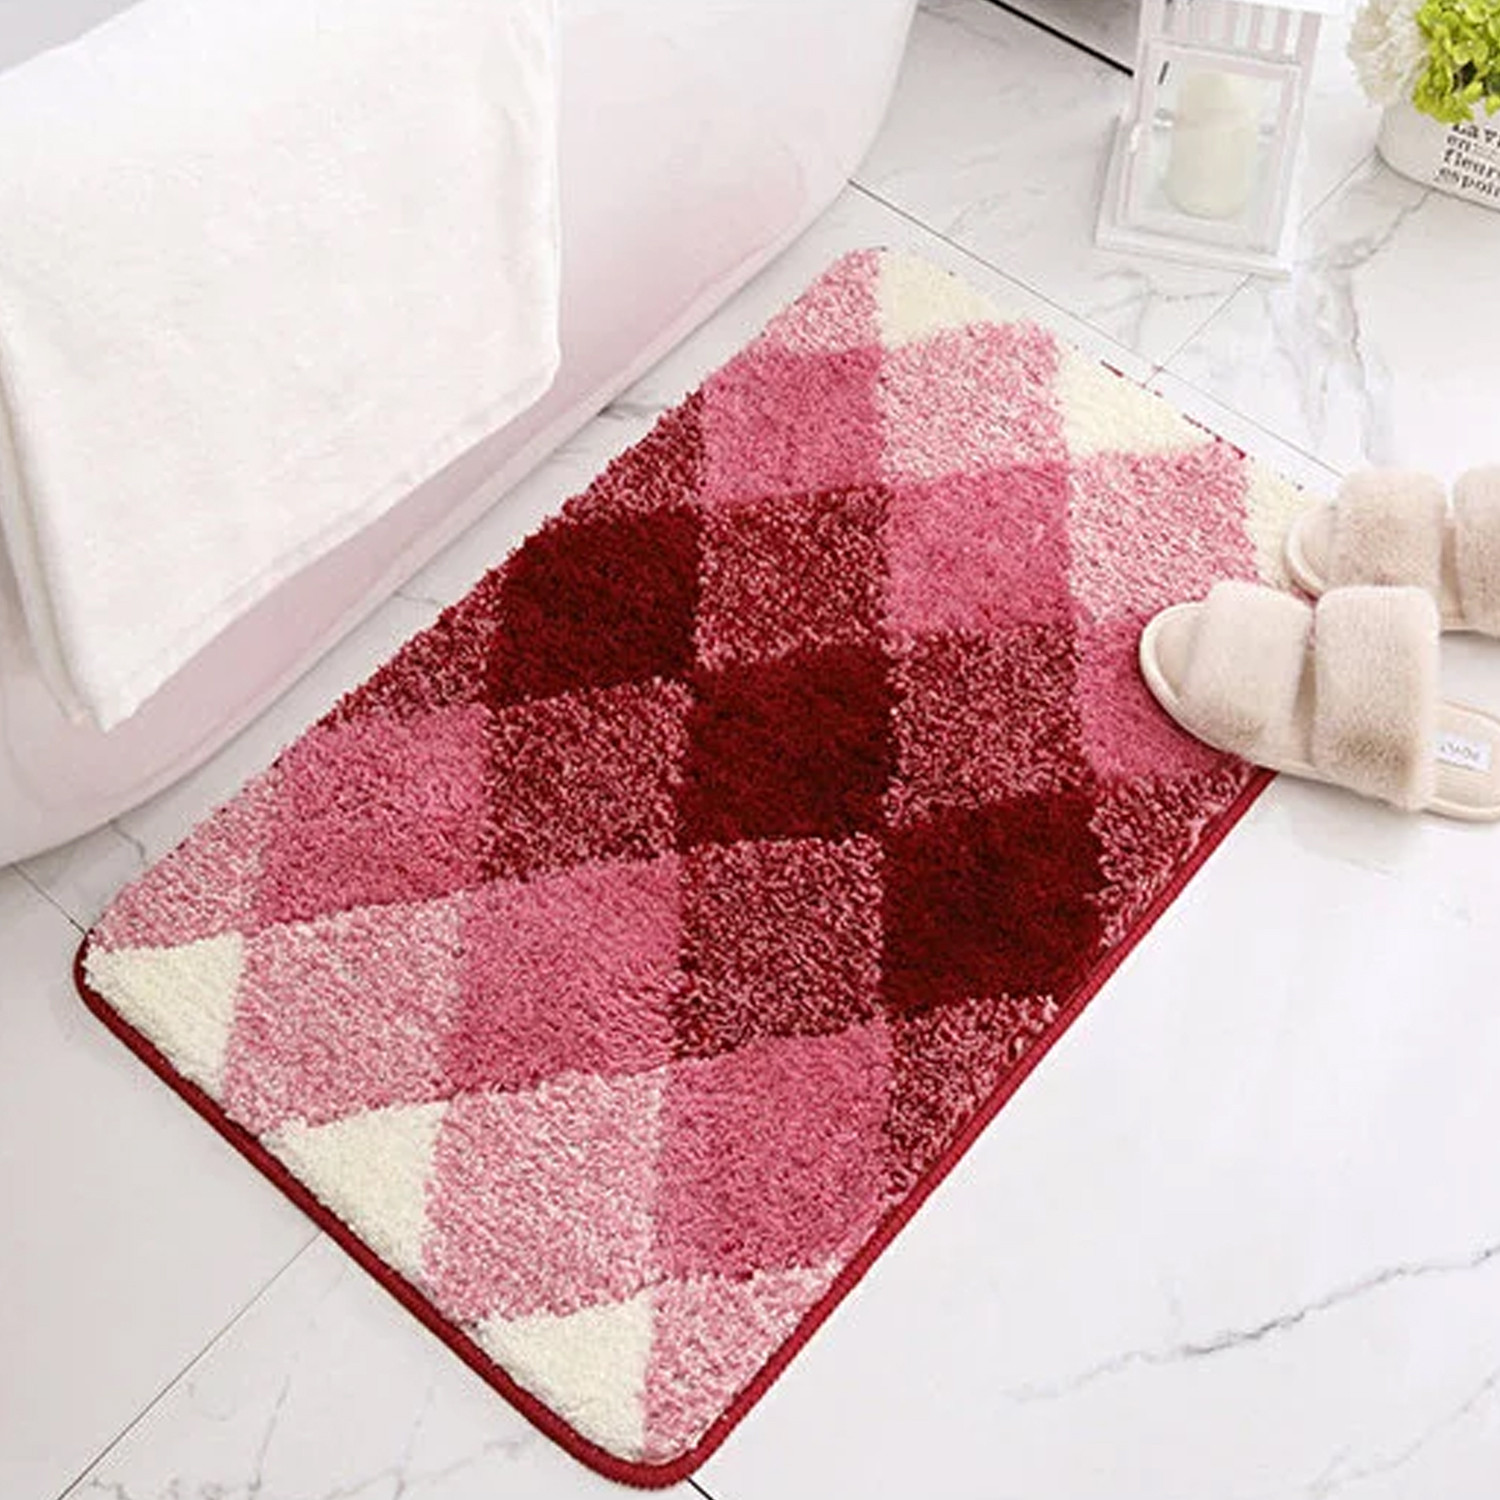 Kuber Industries Soft Bathroom Mat|Anti-Slip Mat For Bathroom Floor|Diamond Design With TPR Backing|Foot Mats For Home, Living Room, Bedroom (Red)